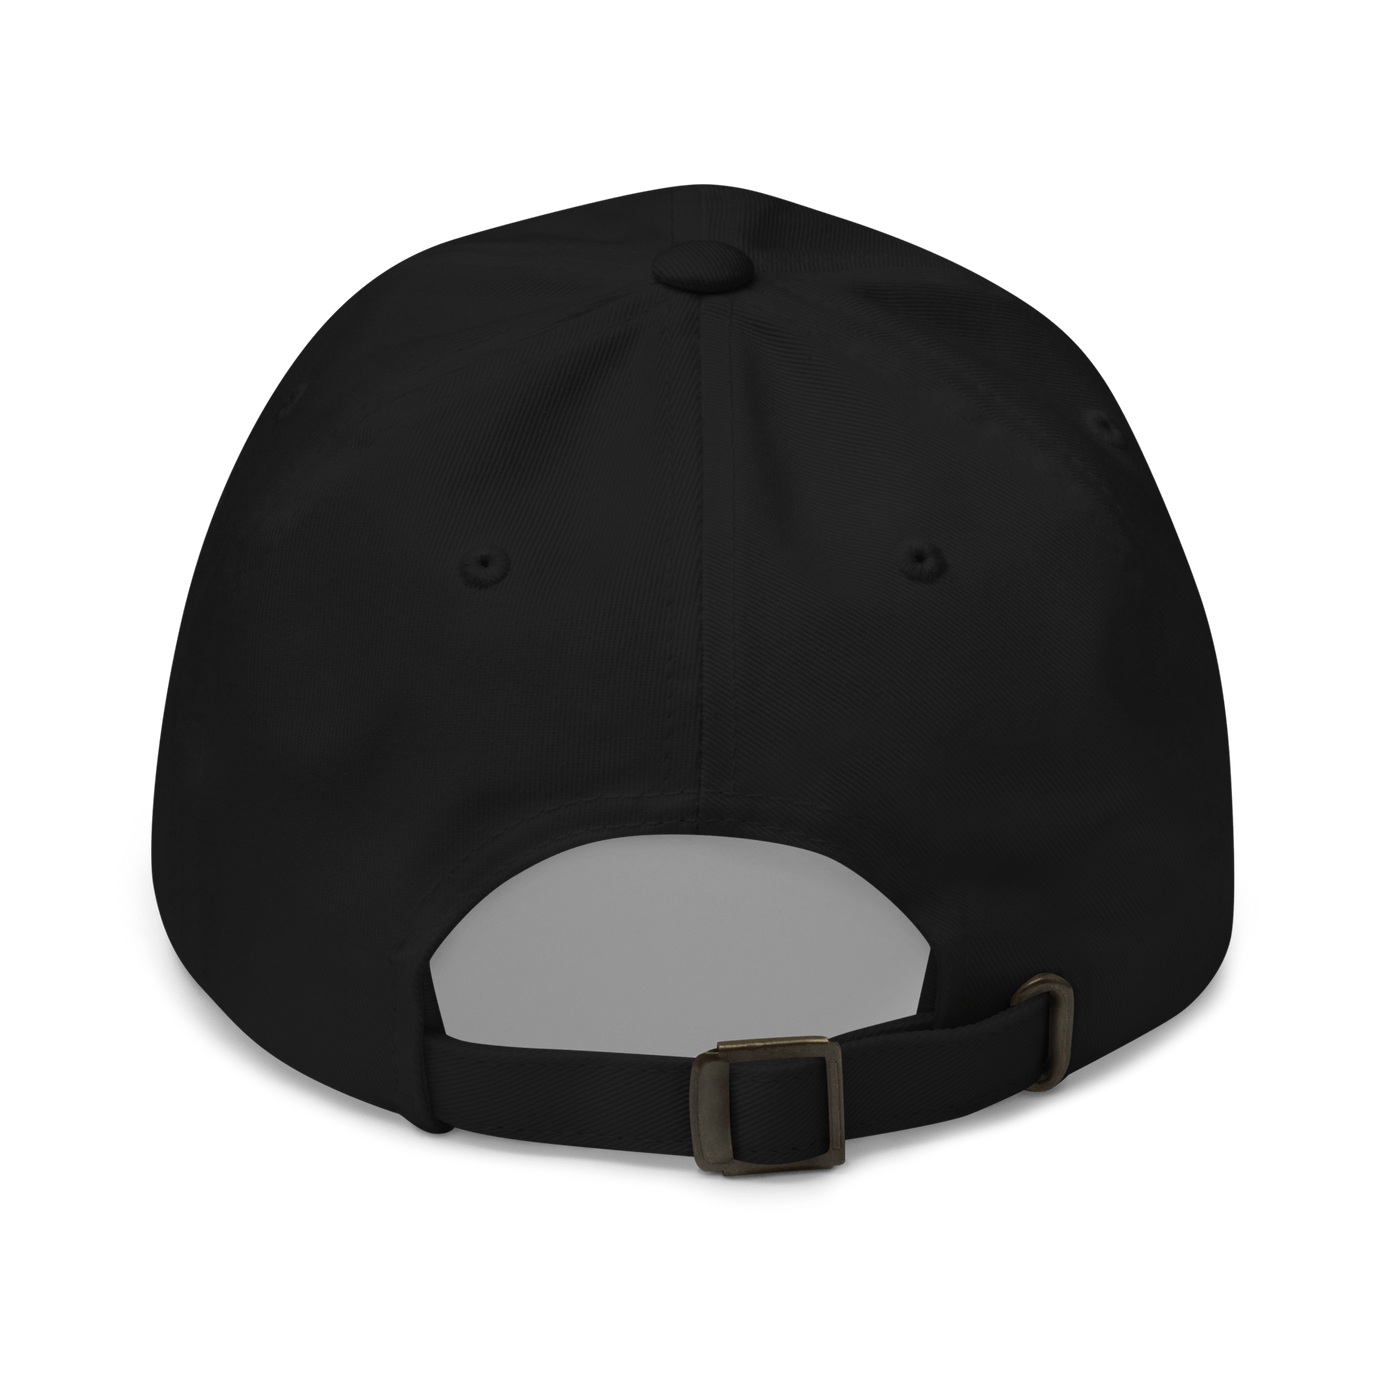 Ramen Bowl Dad hat - Black - - Just Another Cap Store